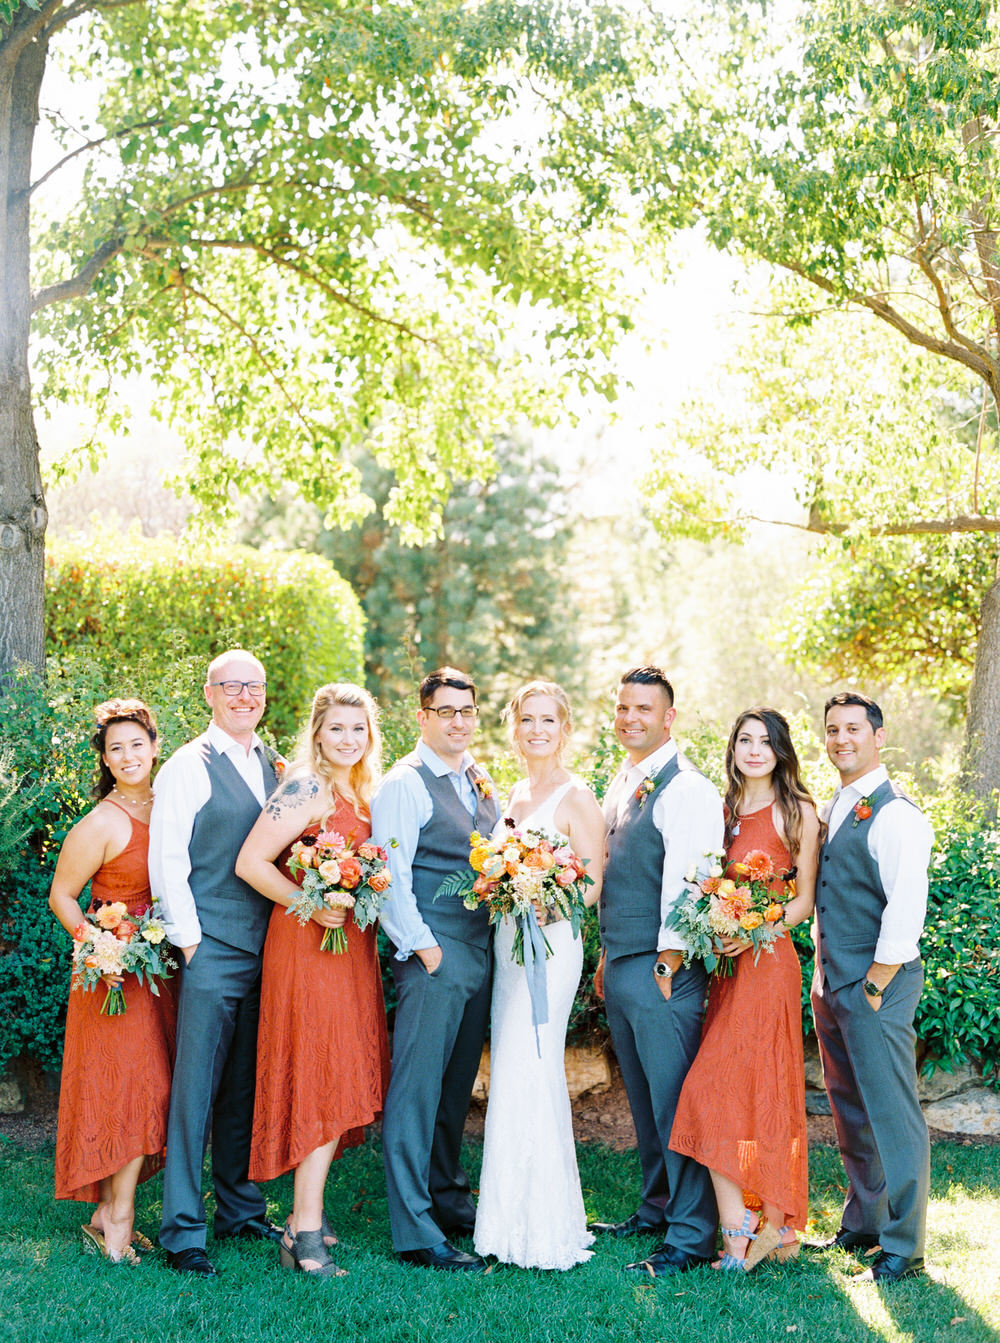 https://ruffledblog.com/wp-content/uploads/2020/02/Colorful-Northern-California-Wedding-Terracotta-Blue-11.jpg